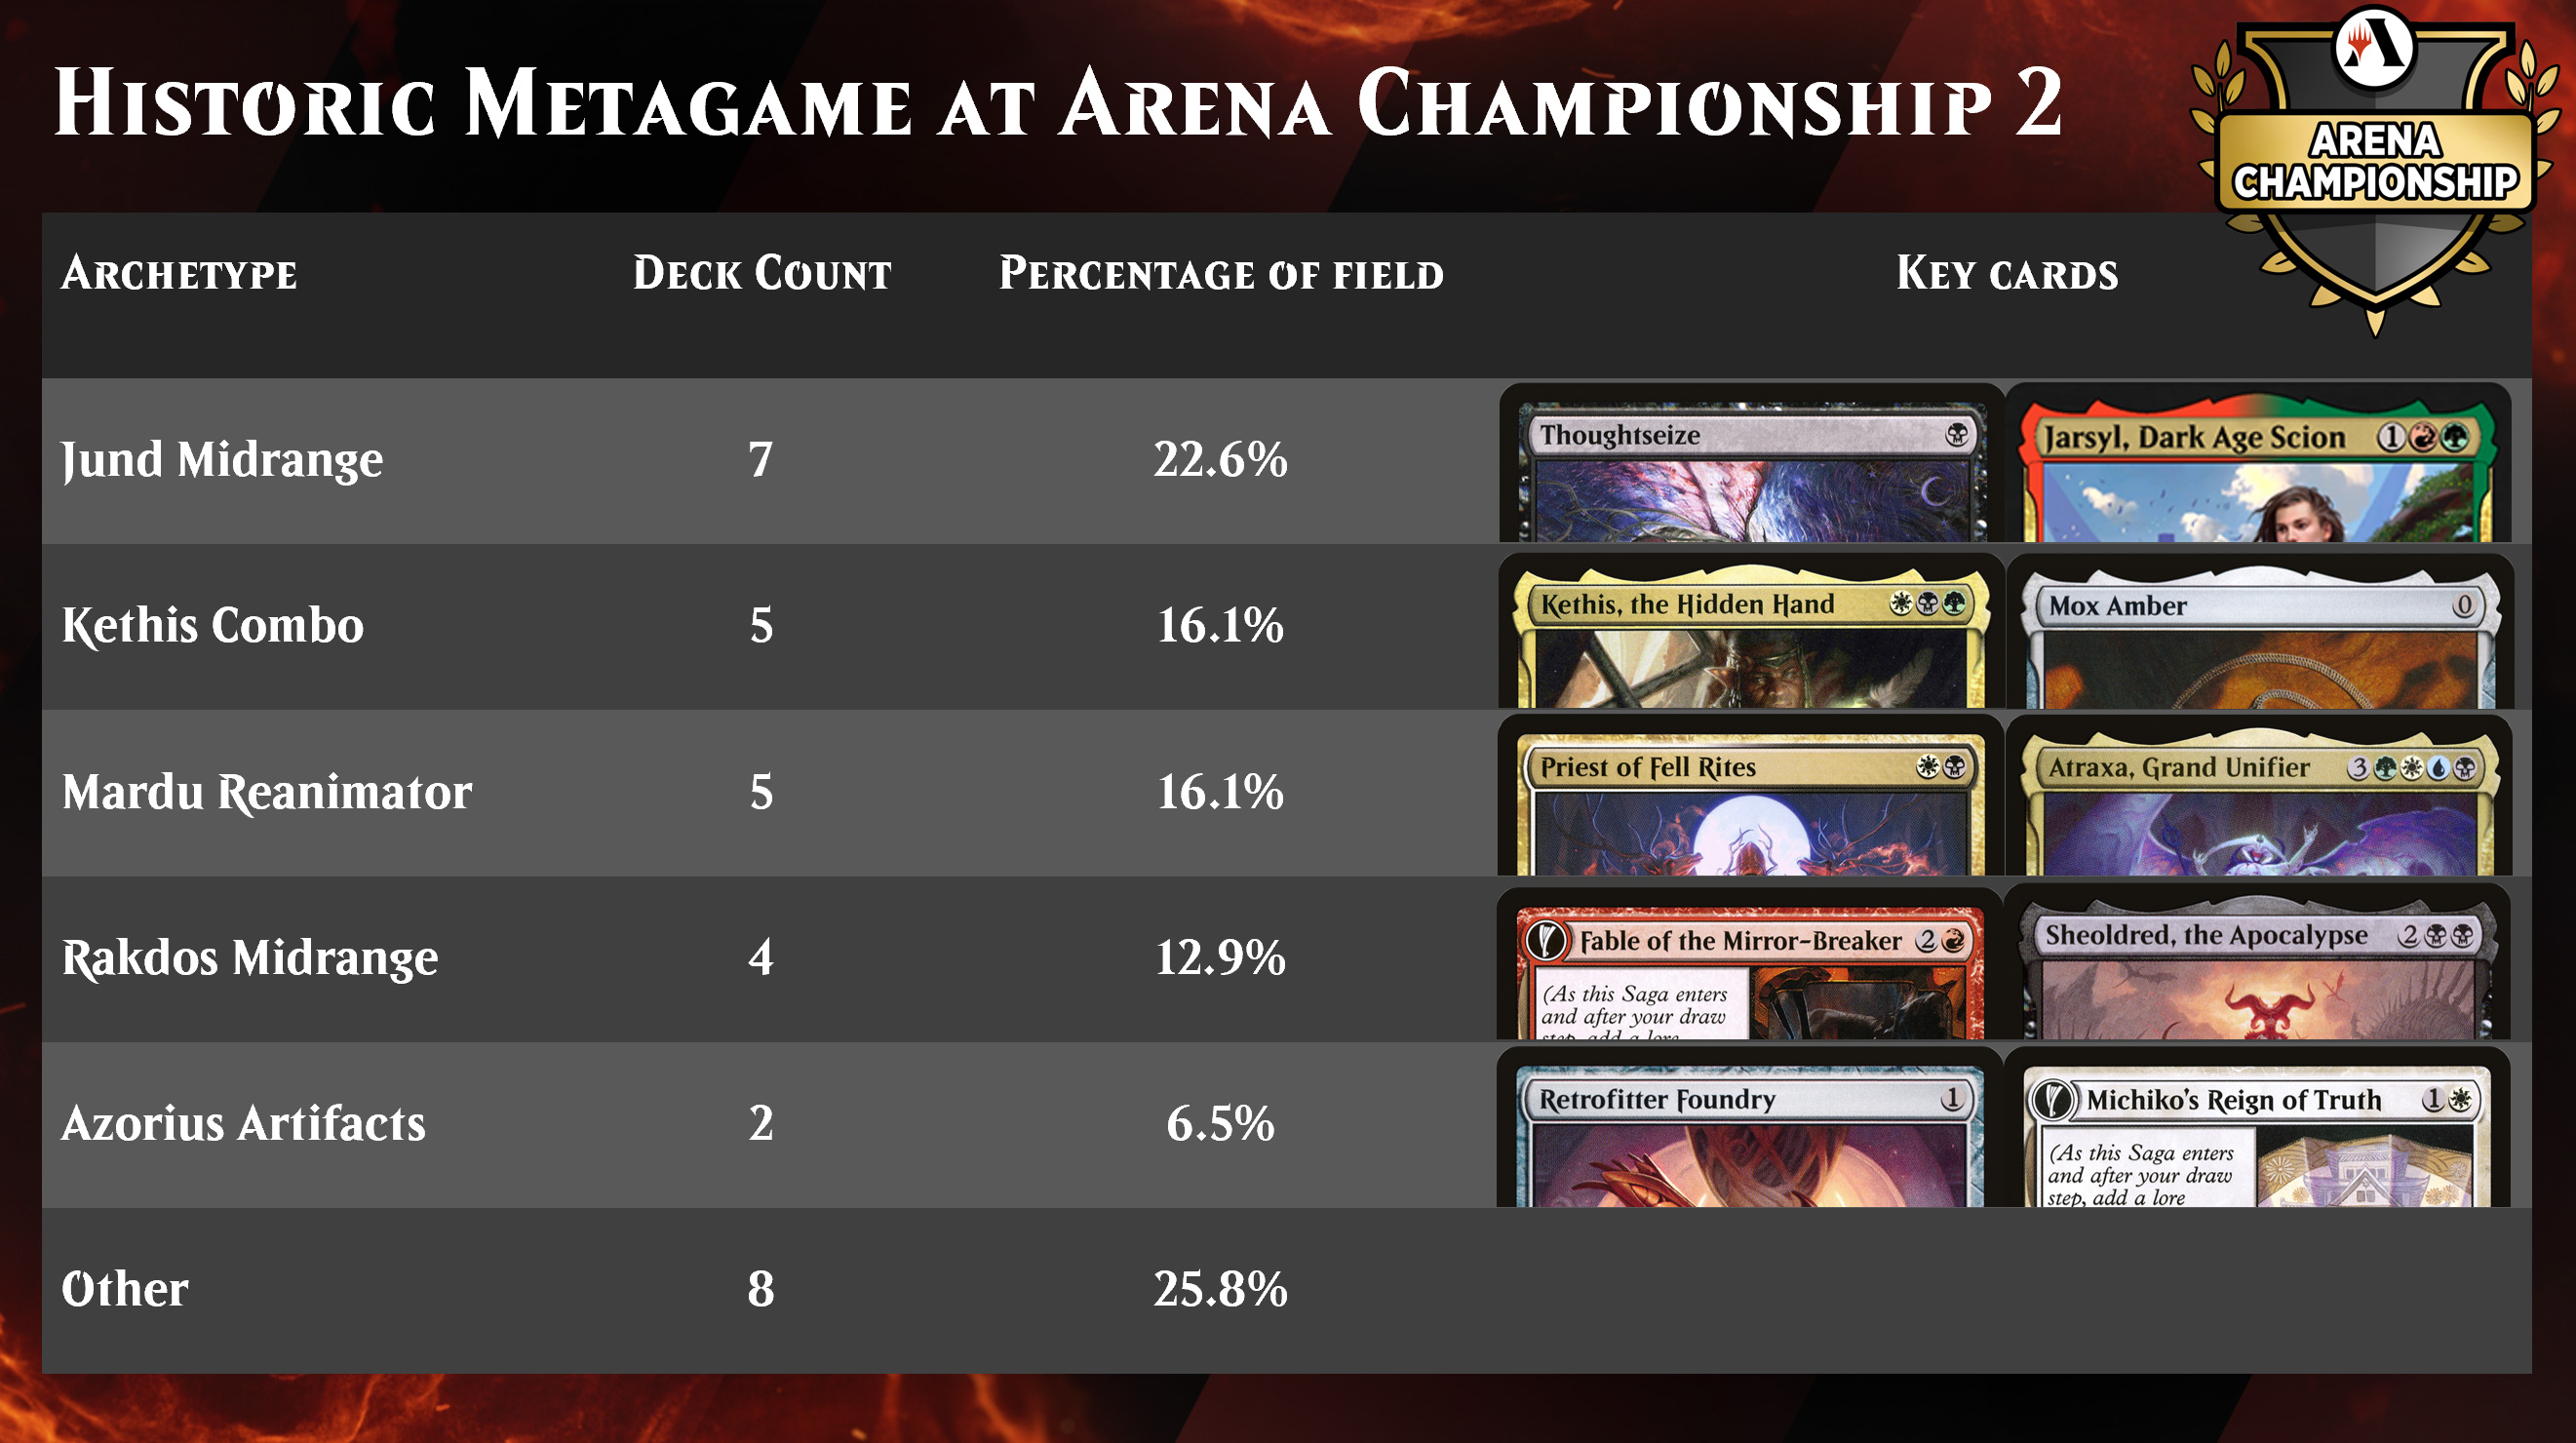 Standard Metagame Breakdown: New Capenna Championship • MTG Arena Zone